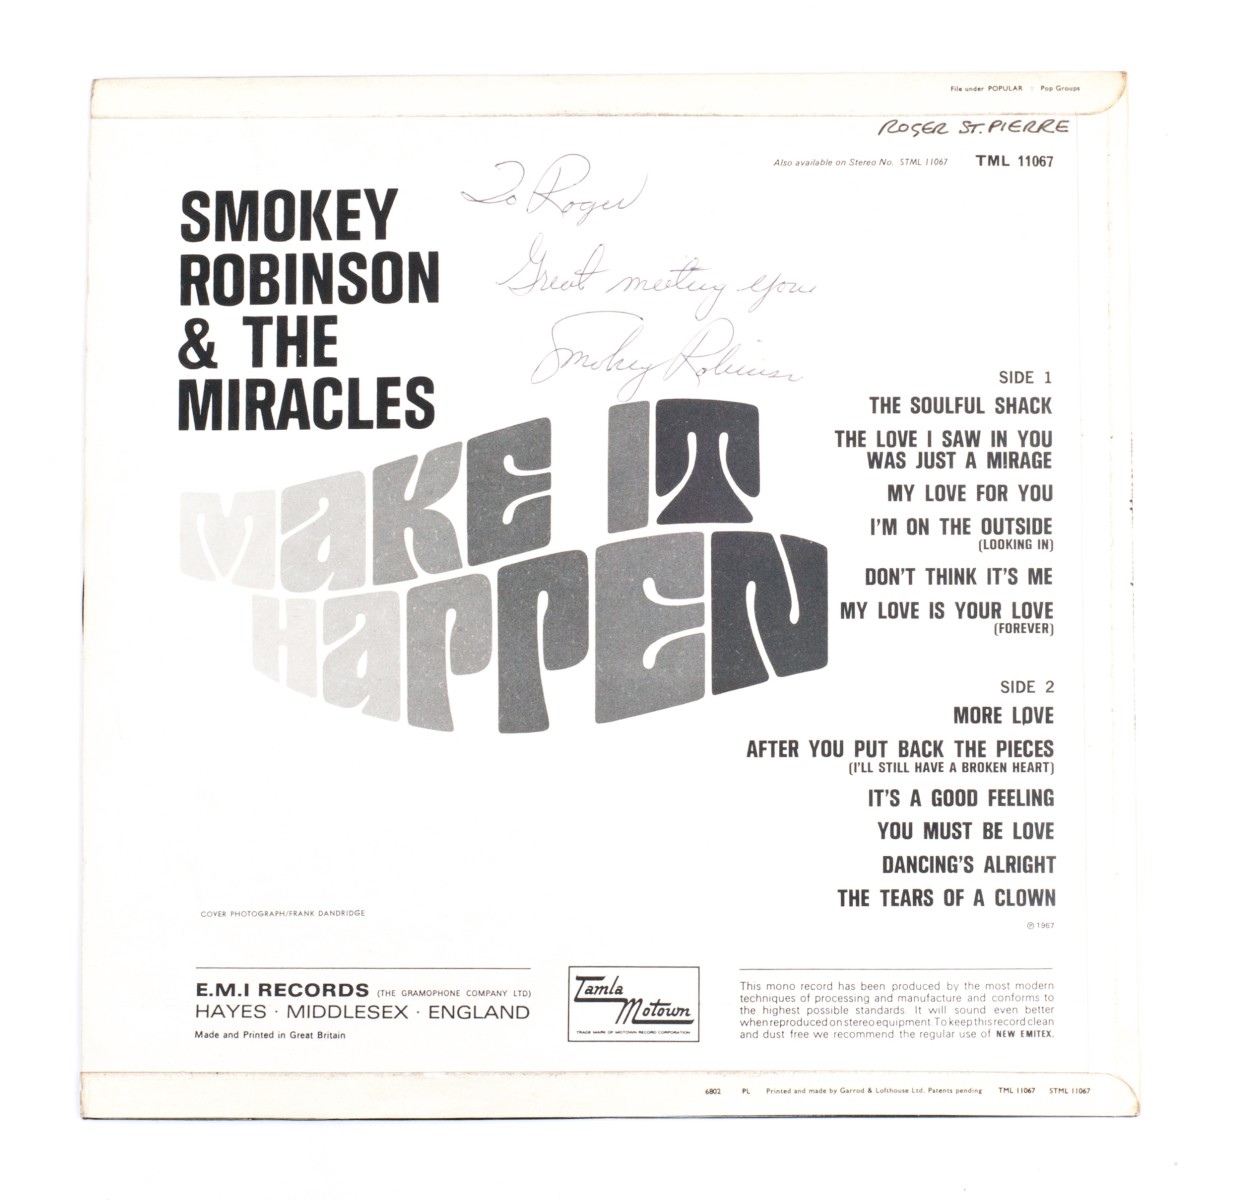 Smokey Robinson And The Miracles Autograph: Make It Happen - Tamla Motown TML 11067 UK 1967 album